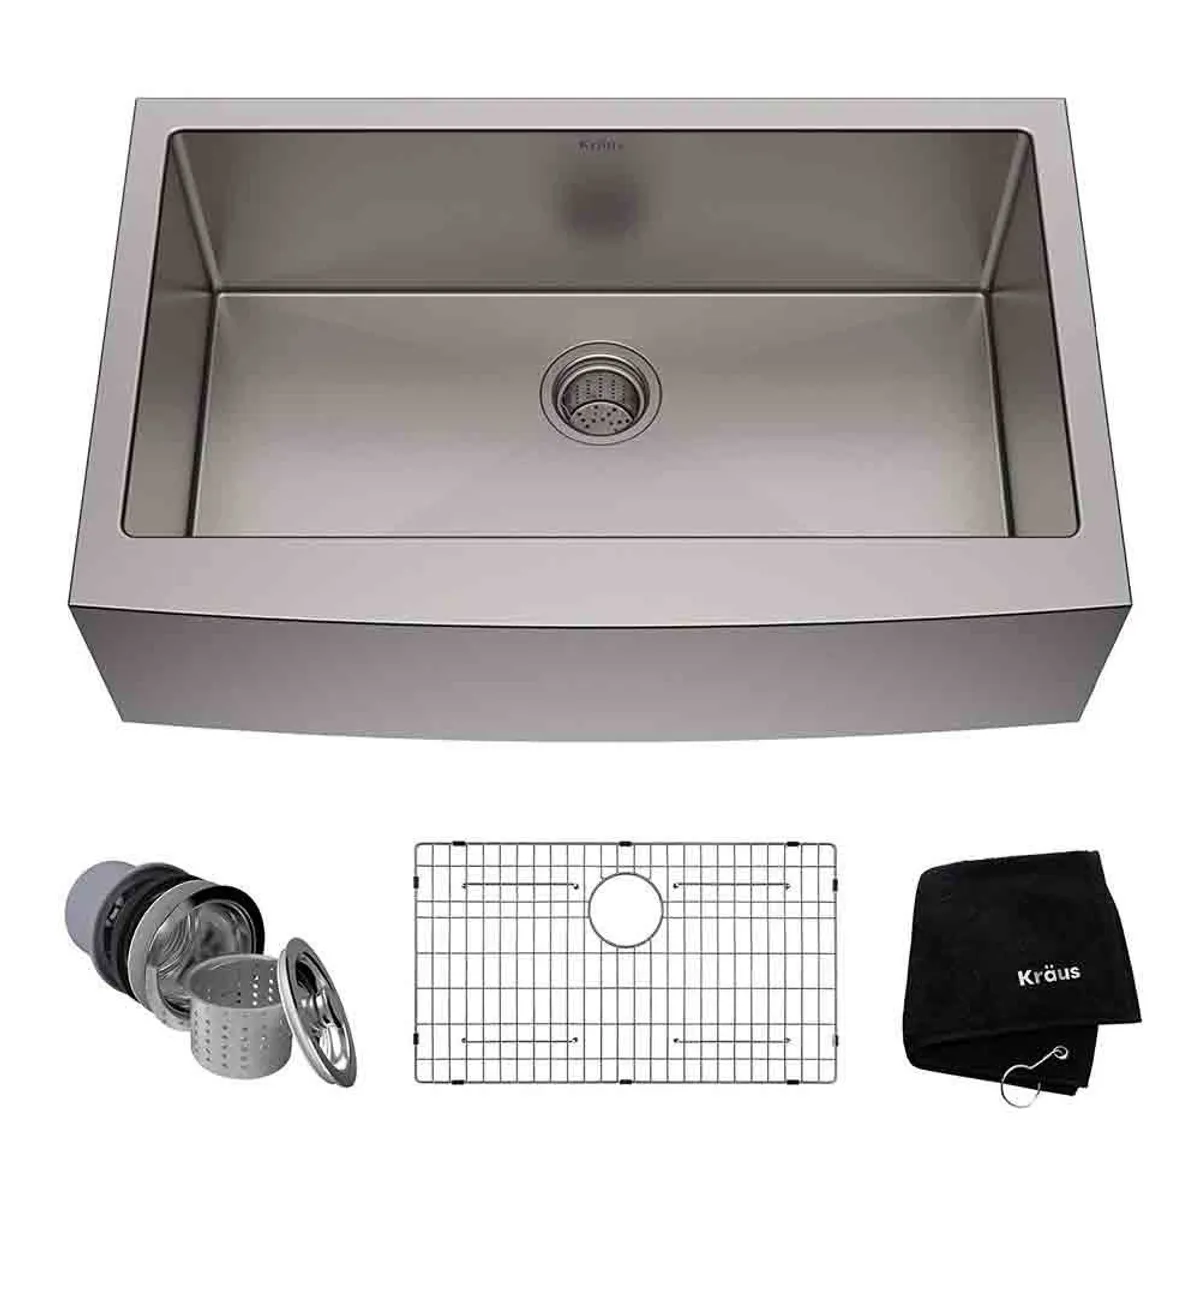 Kraus 33 inch Single Bowl Multi mount Kitchen Sink Review